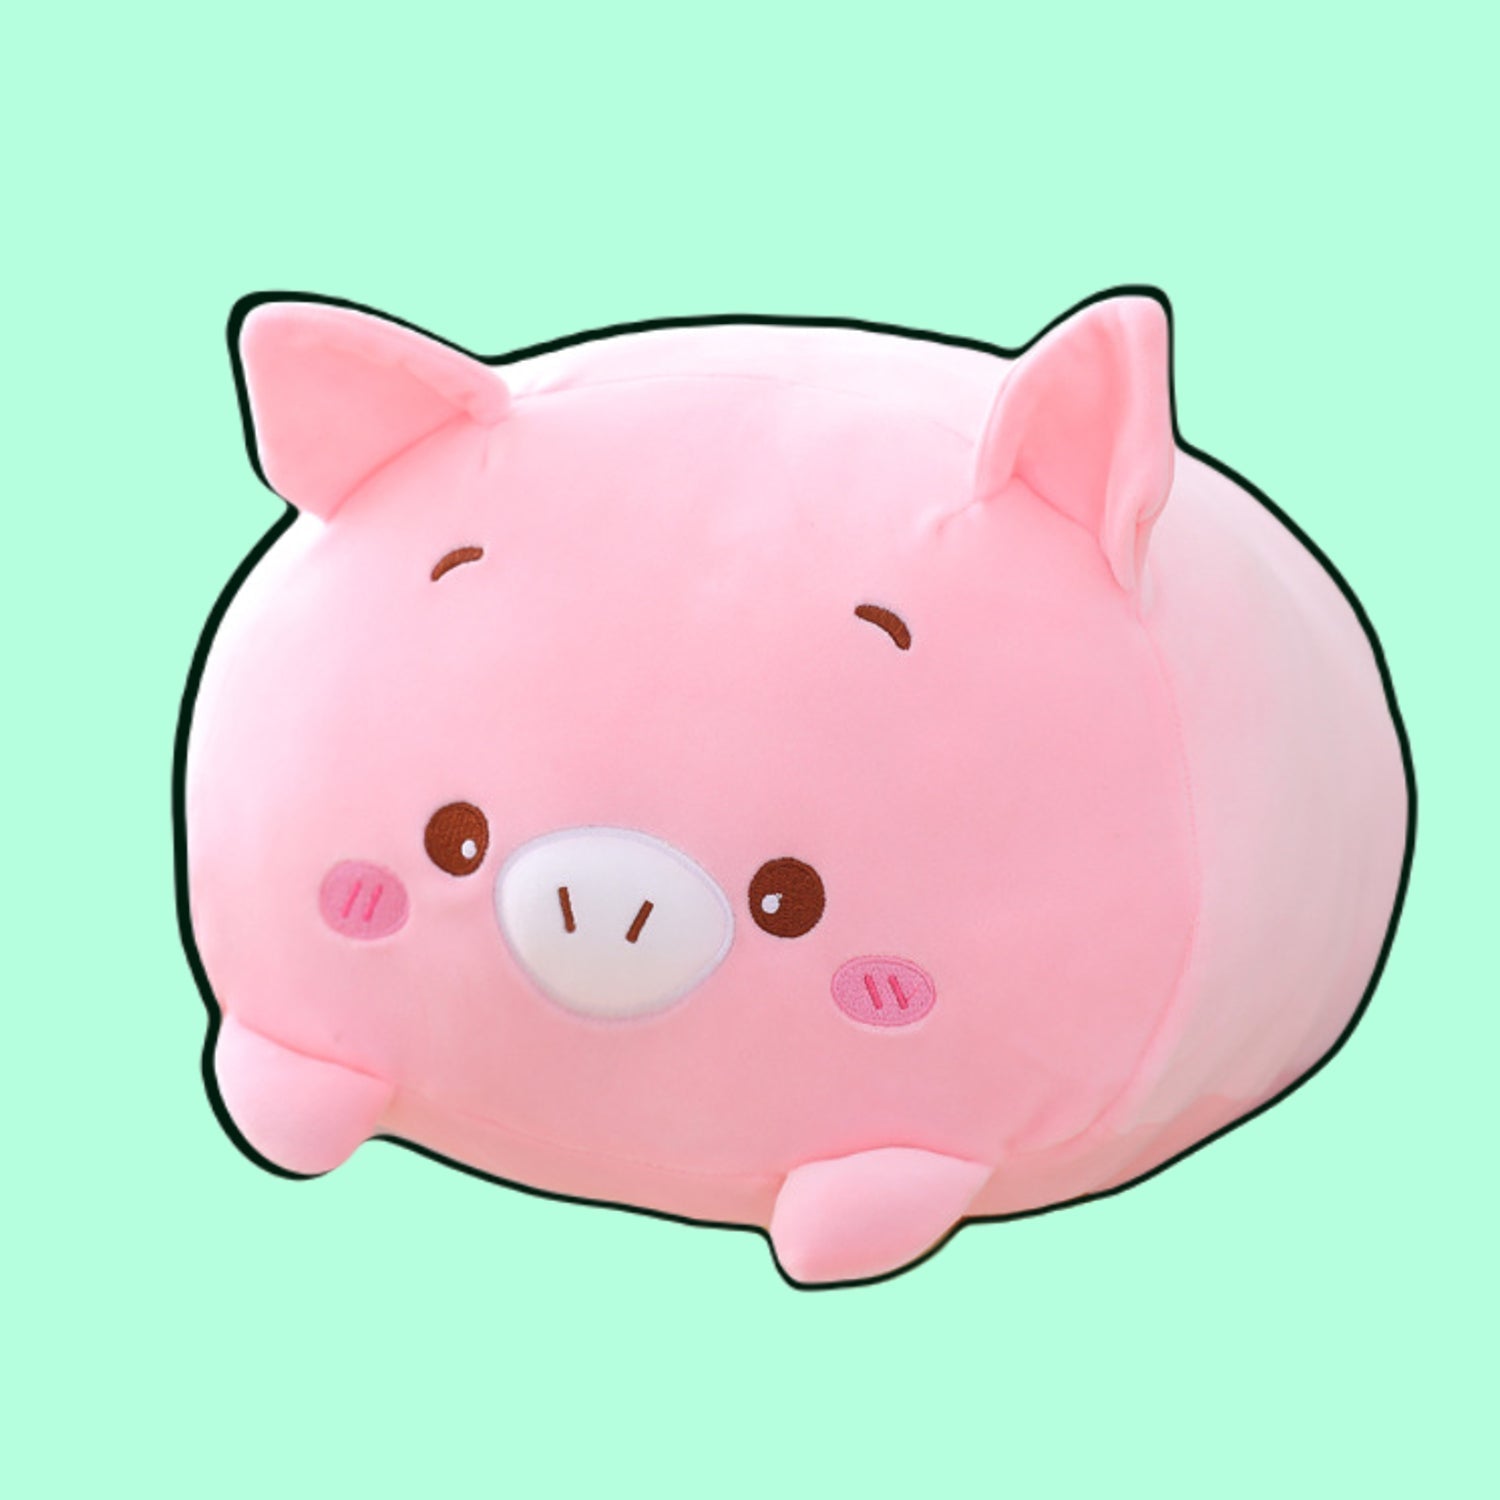 omgkawaii Stuffed Animals 20 CM Pink Pig Plush Toy